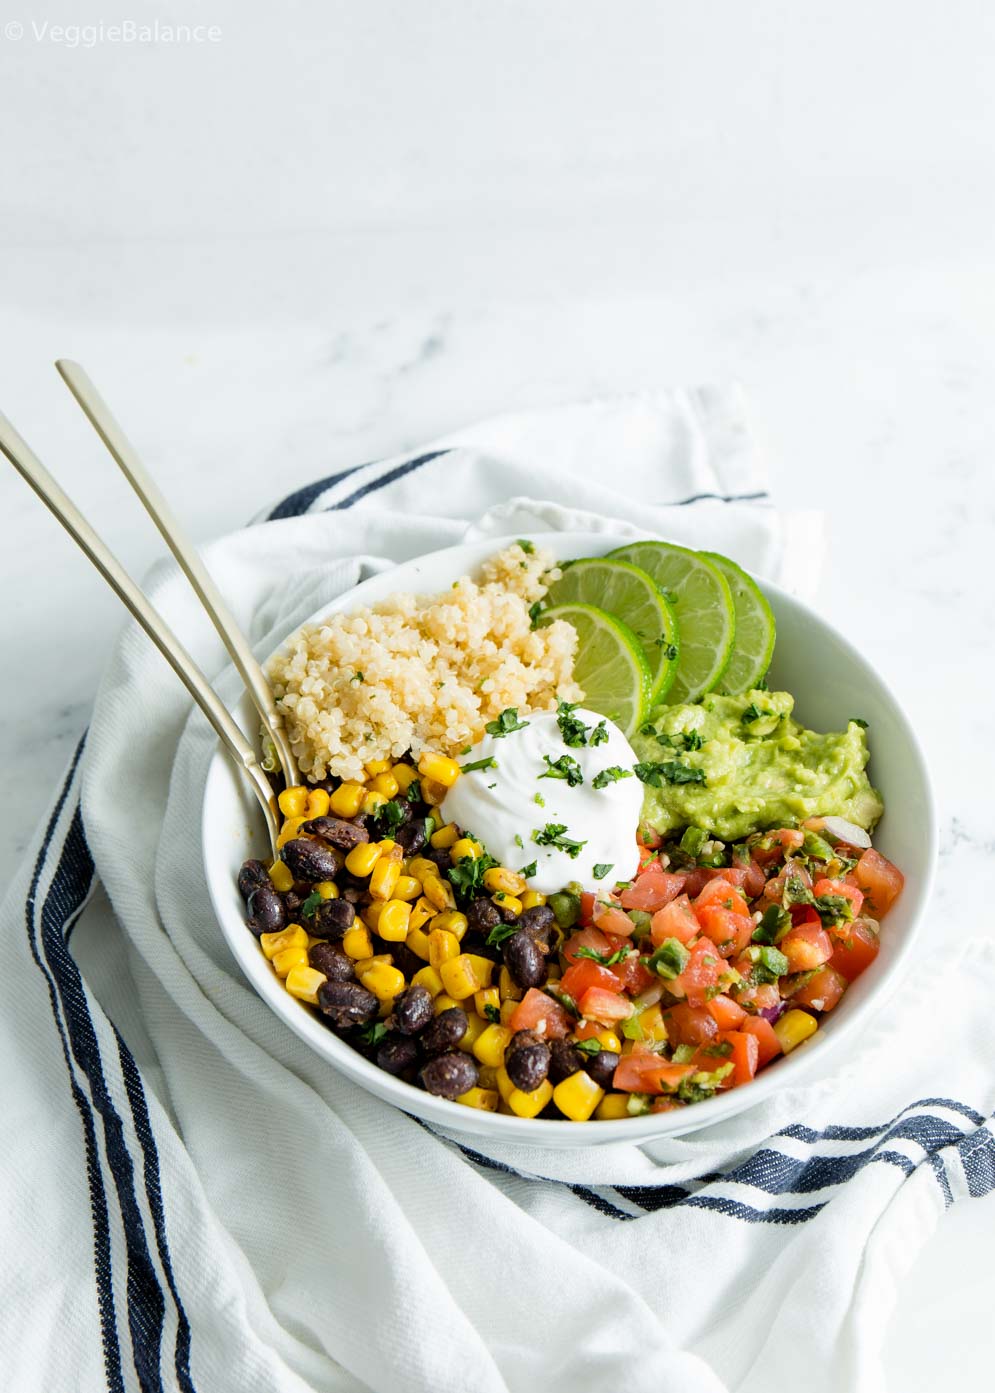 Easy and Delicious Vegan Burrito Bowls Recipe